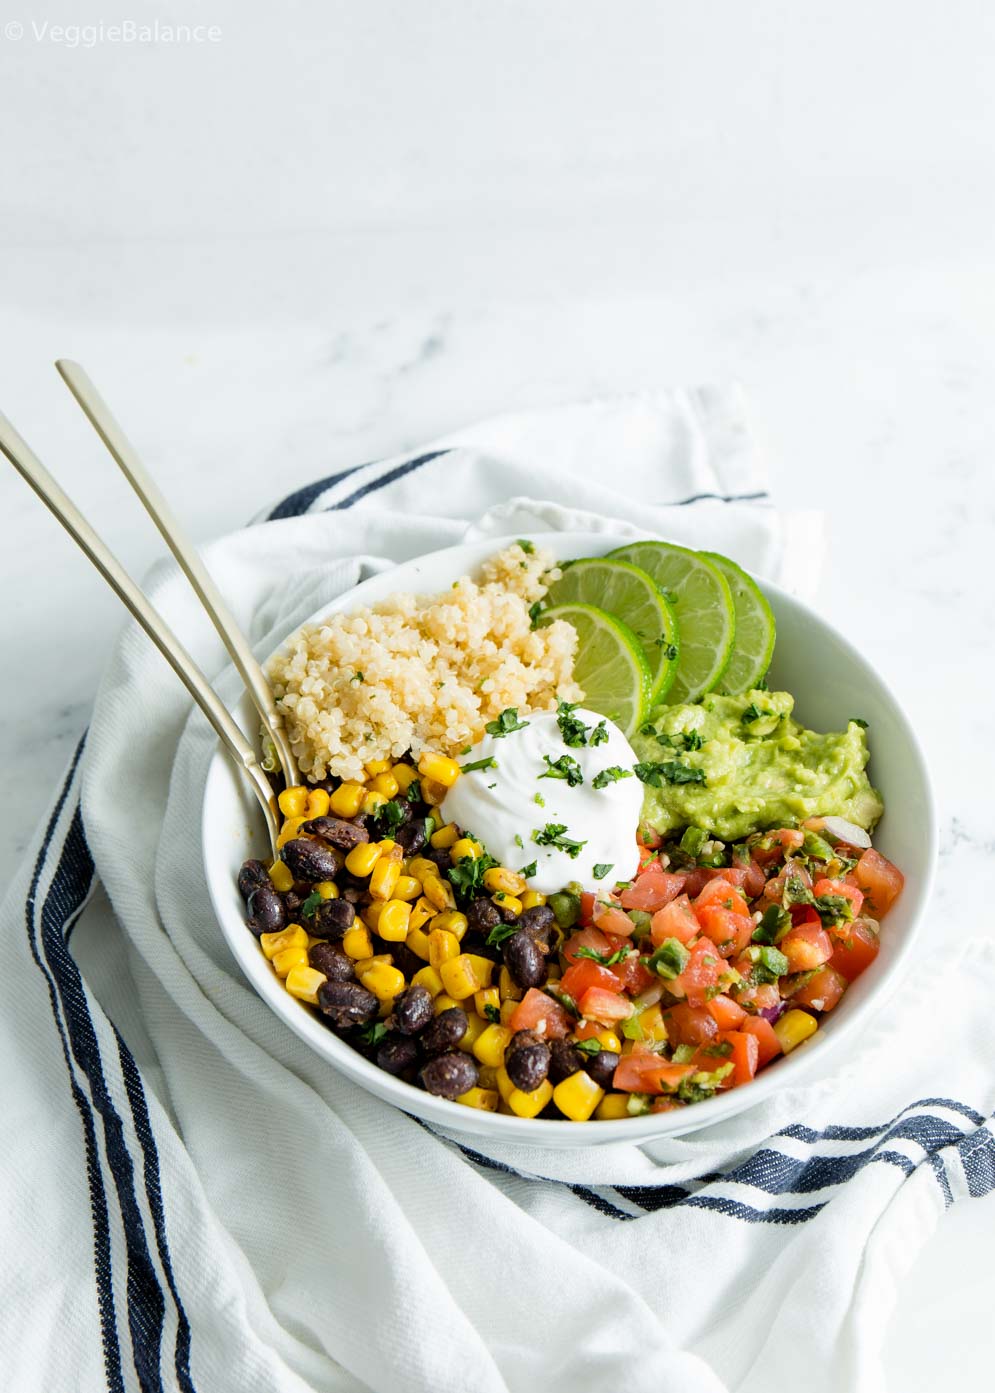 Easy and Delicious Vegan Burrito Bowls Recipe